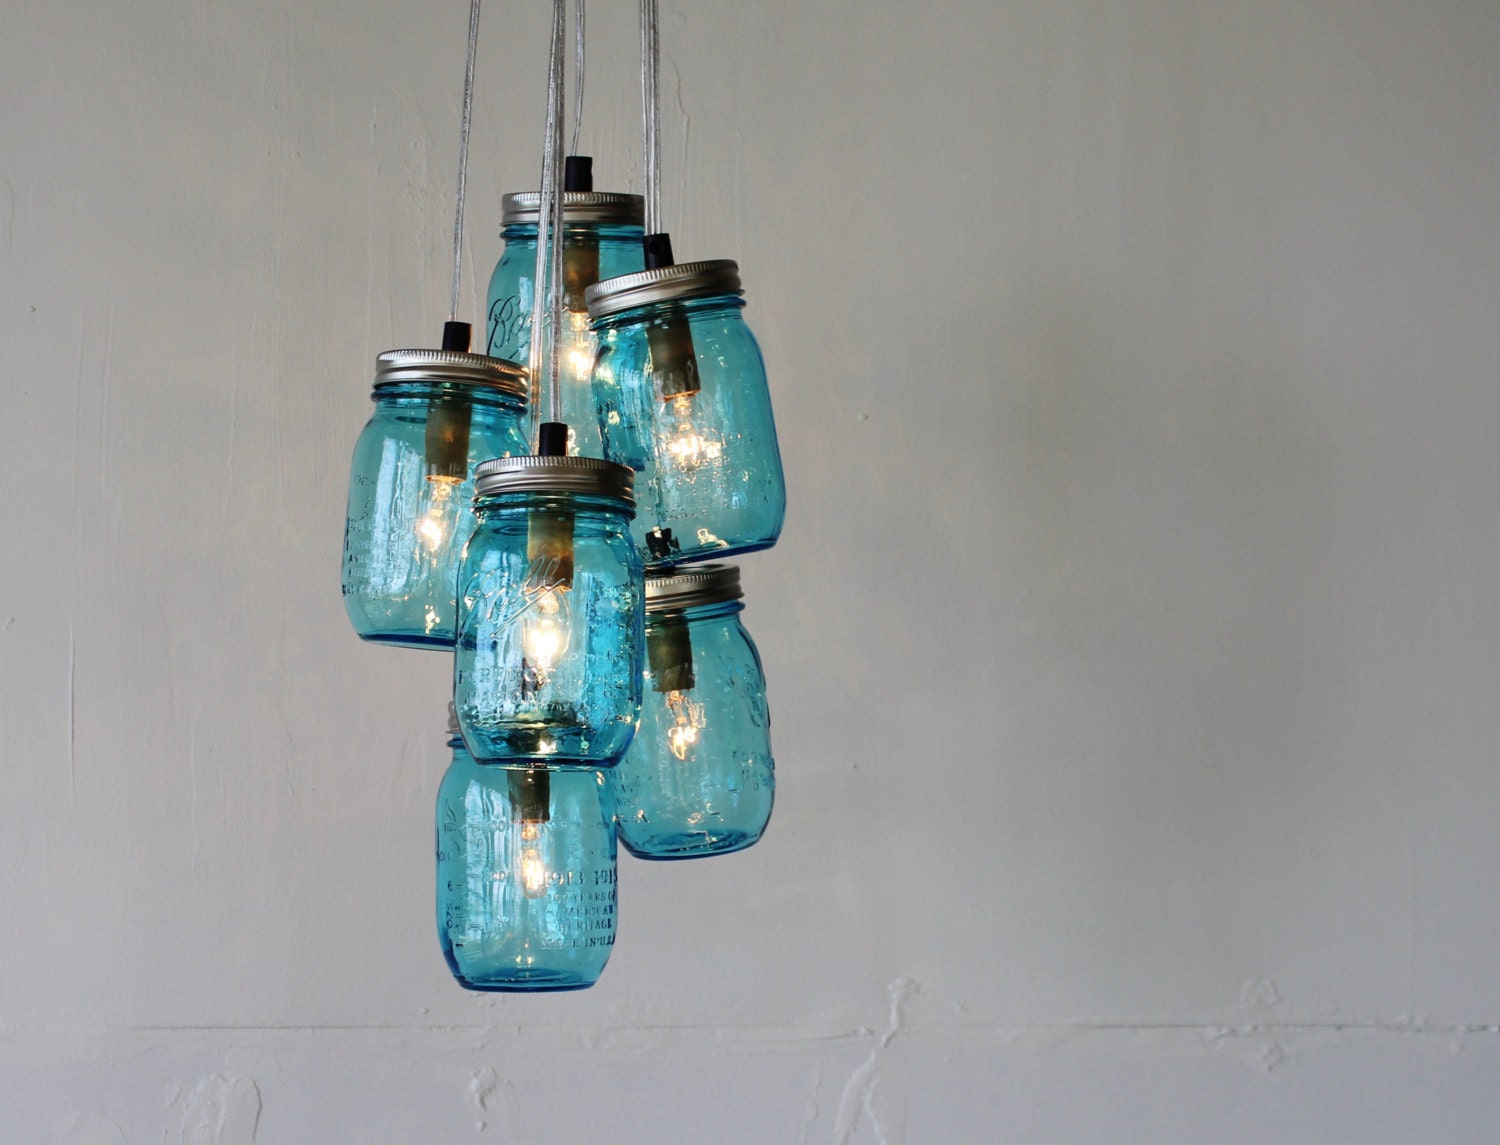 Feelin' Blue - Mason Jar Chandelier Featuring 6 Blue Perfect Mason Jars - Direct Hardwire Hanging Lighting Fixture - BootsNGus Lamps